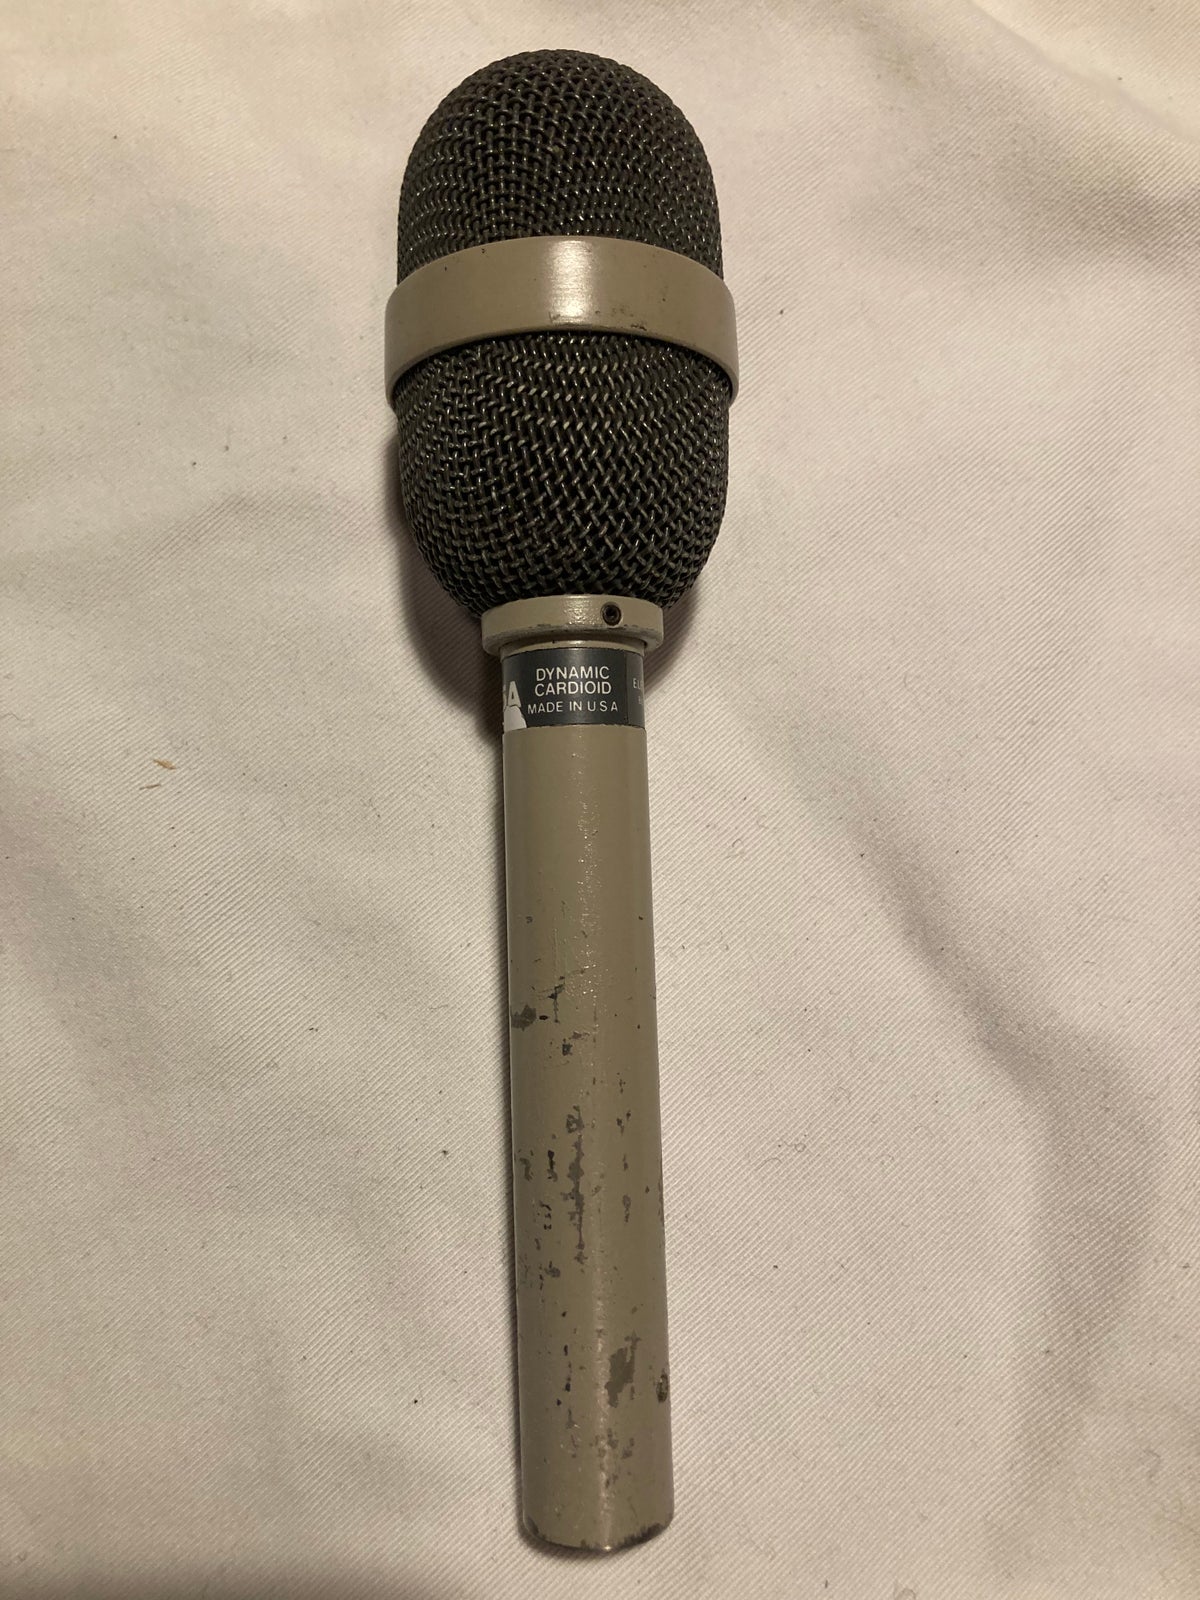 Mikrofon, Electro-Voice PL95A